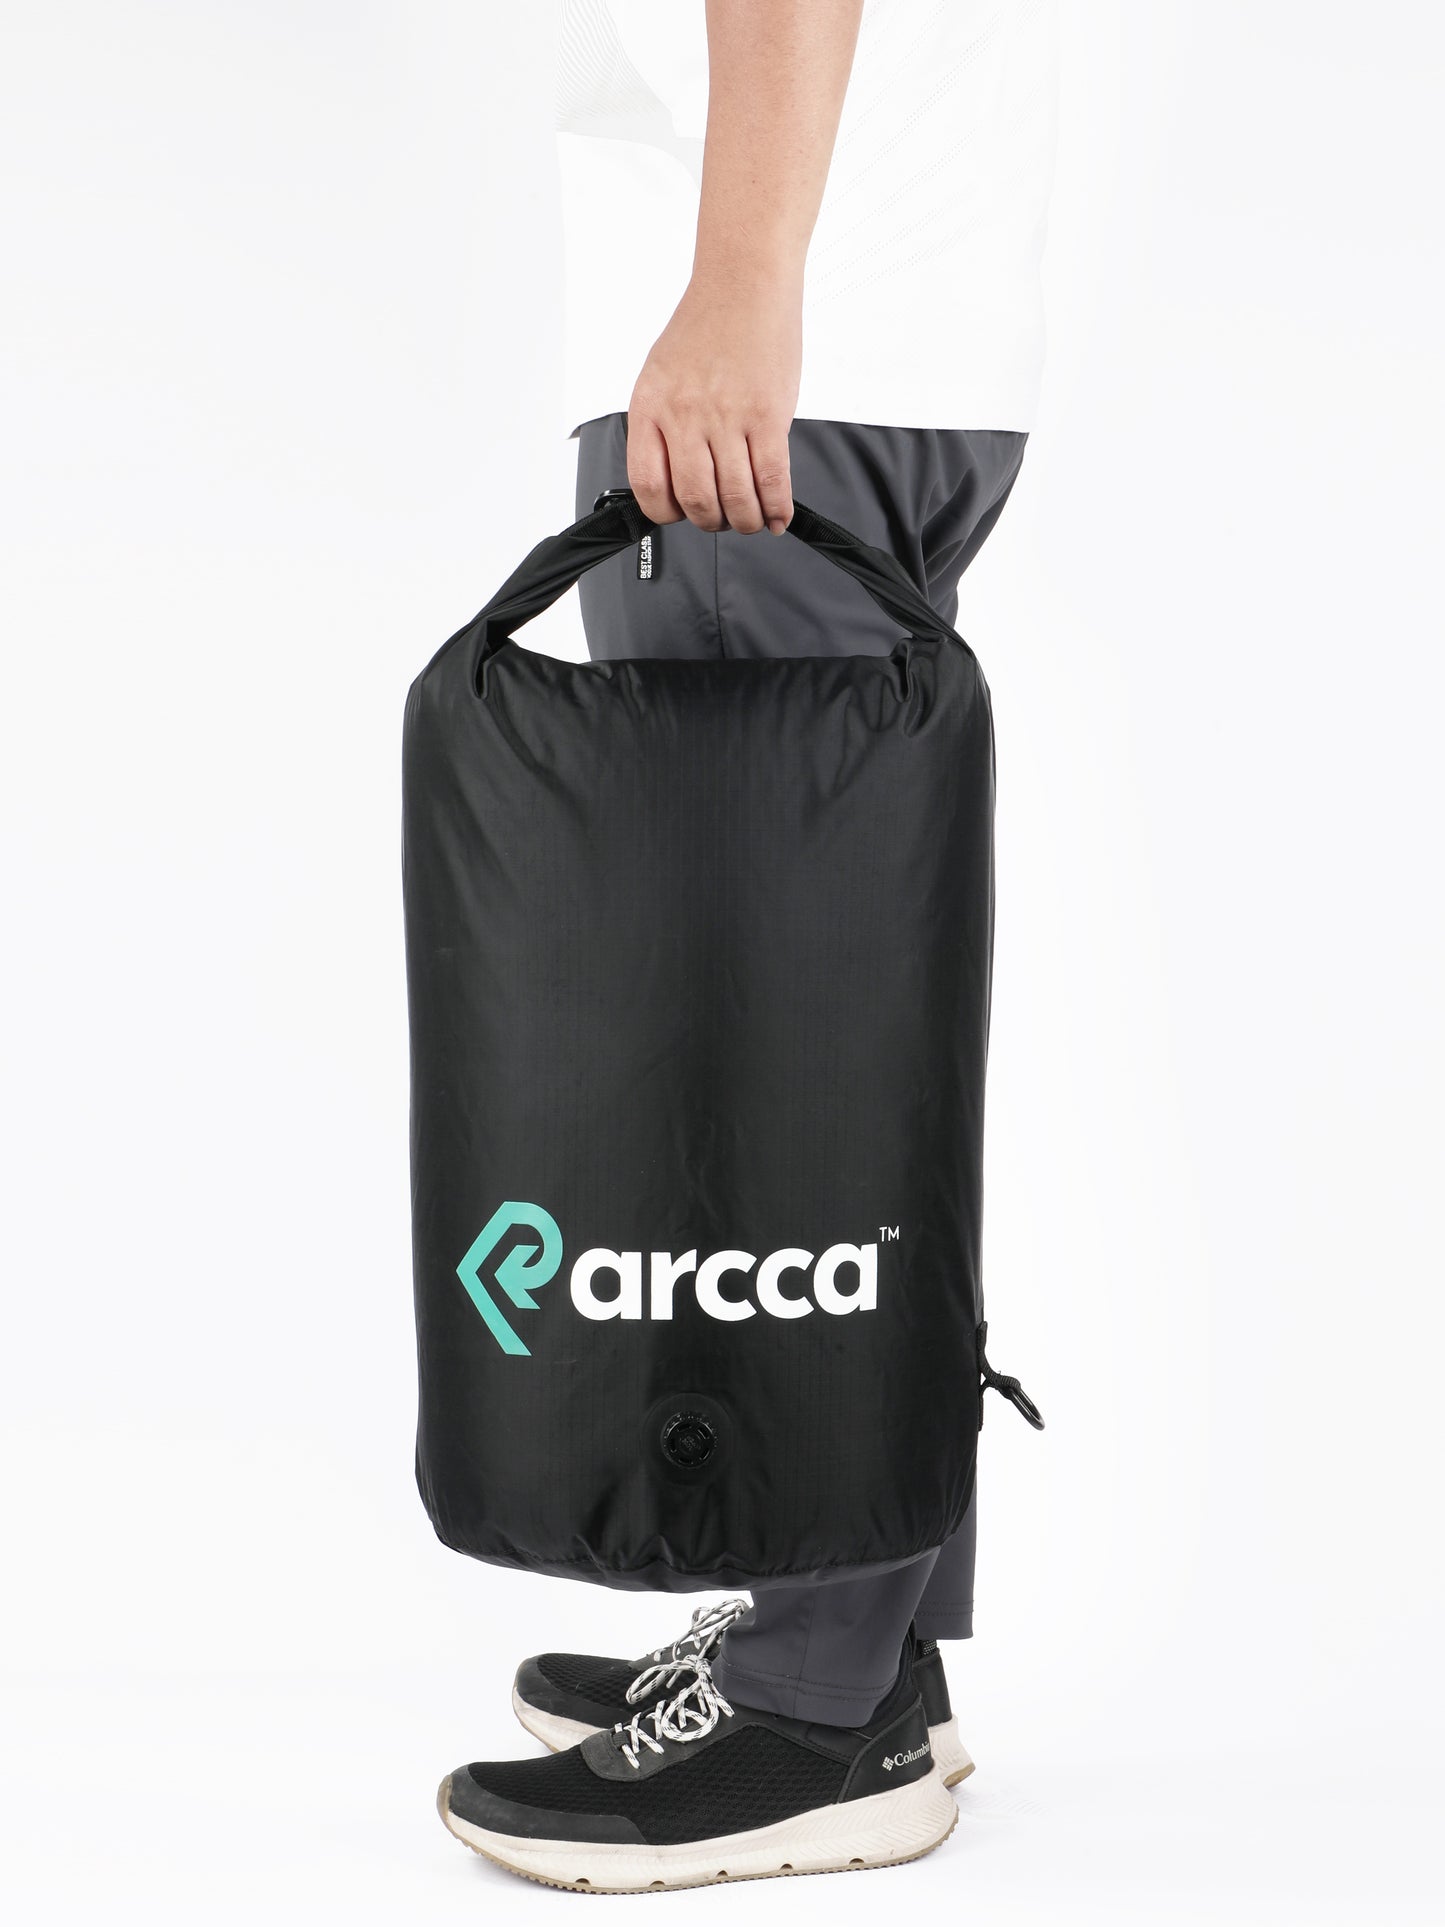 Parcca Compression Travel Bag